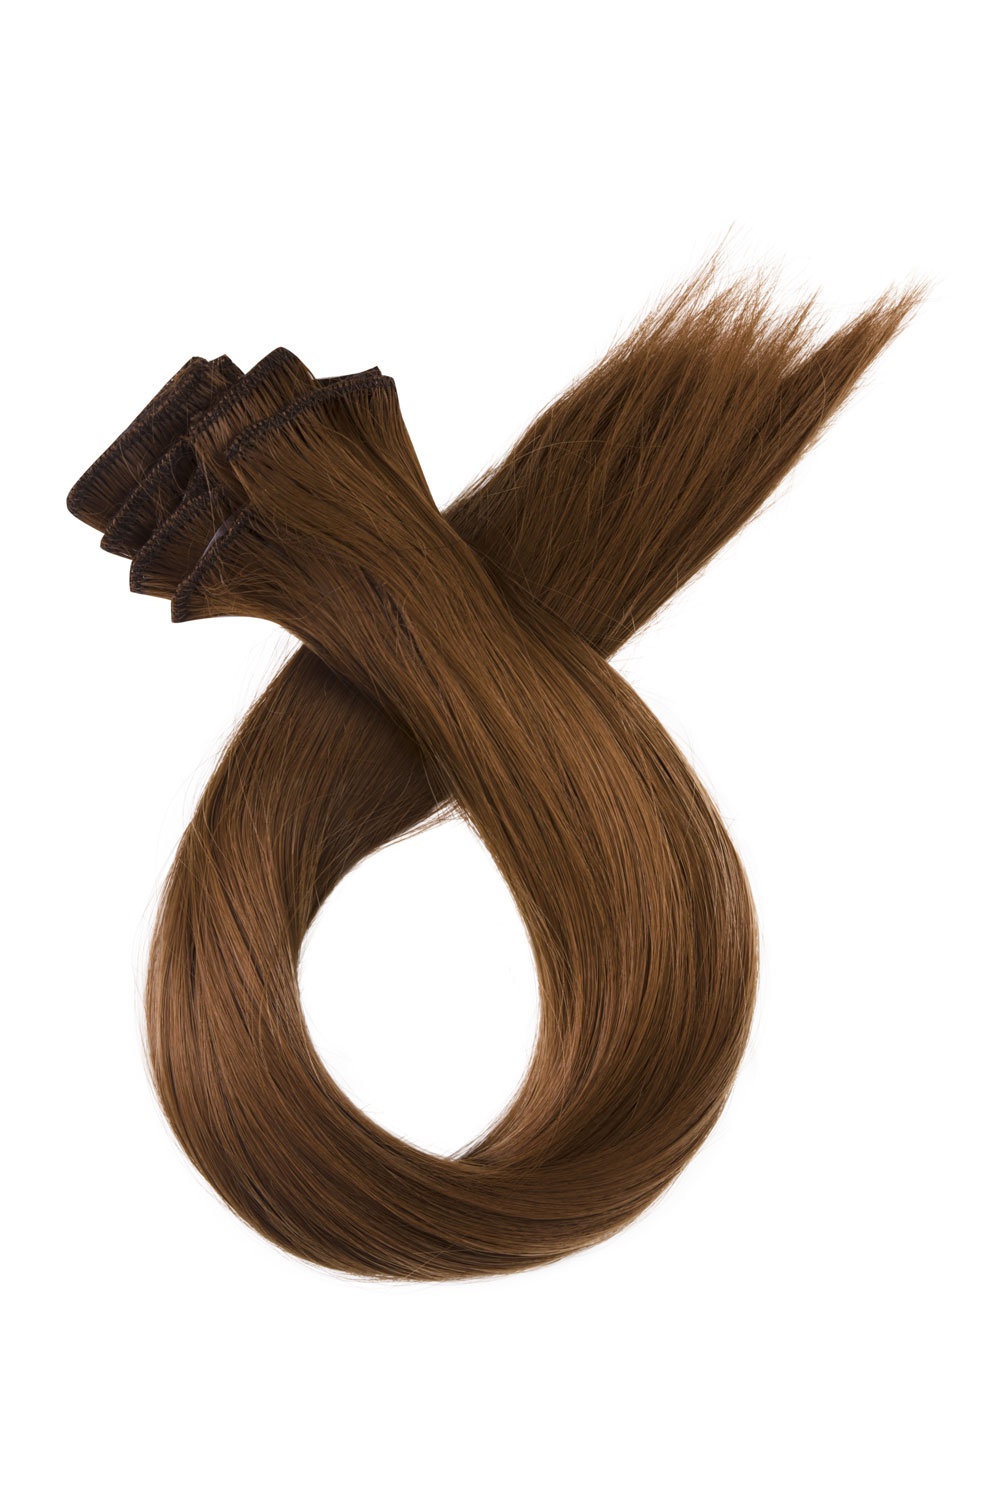 Svetlo hnedé clip in vlasy, 60cm, 115g, farba 12